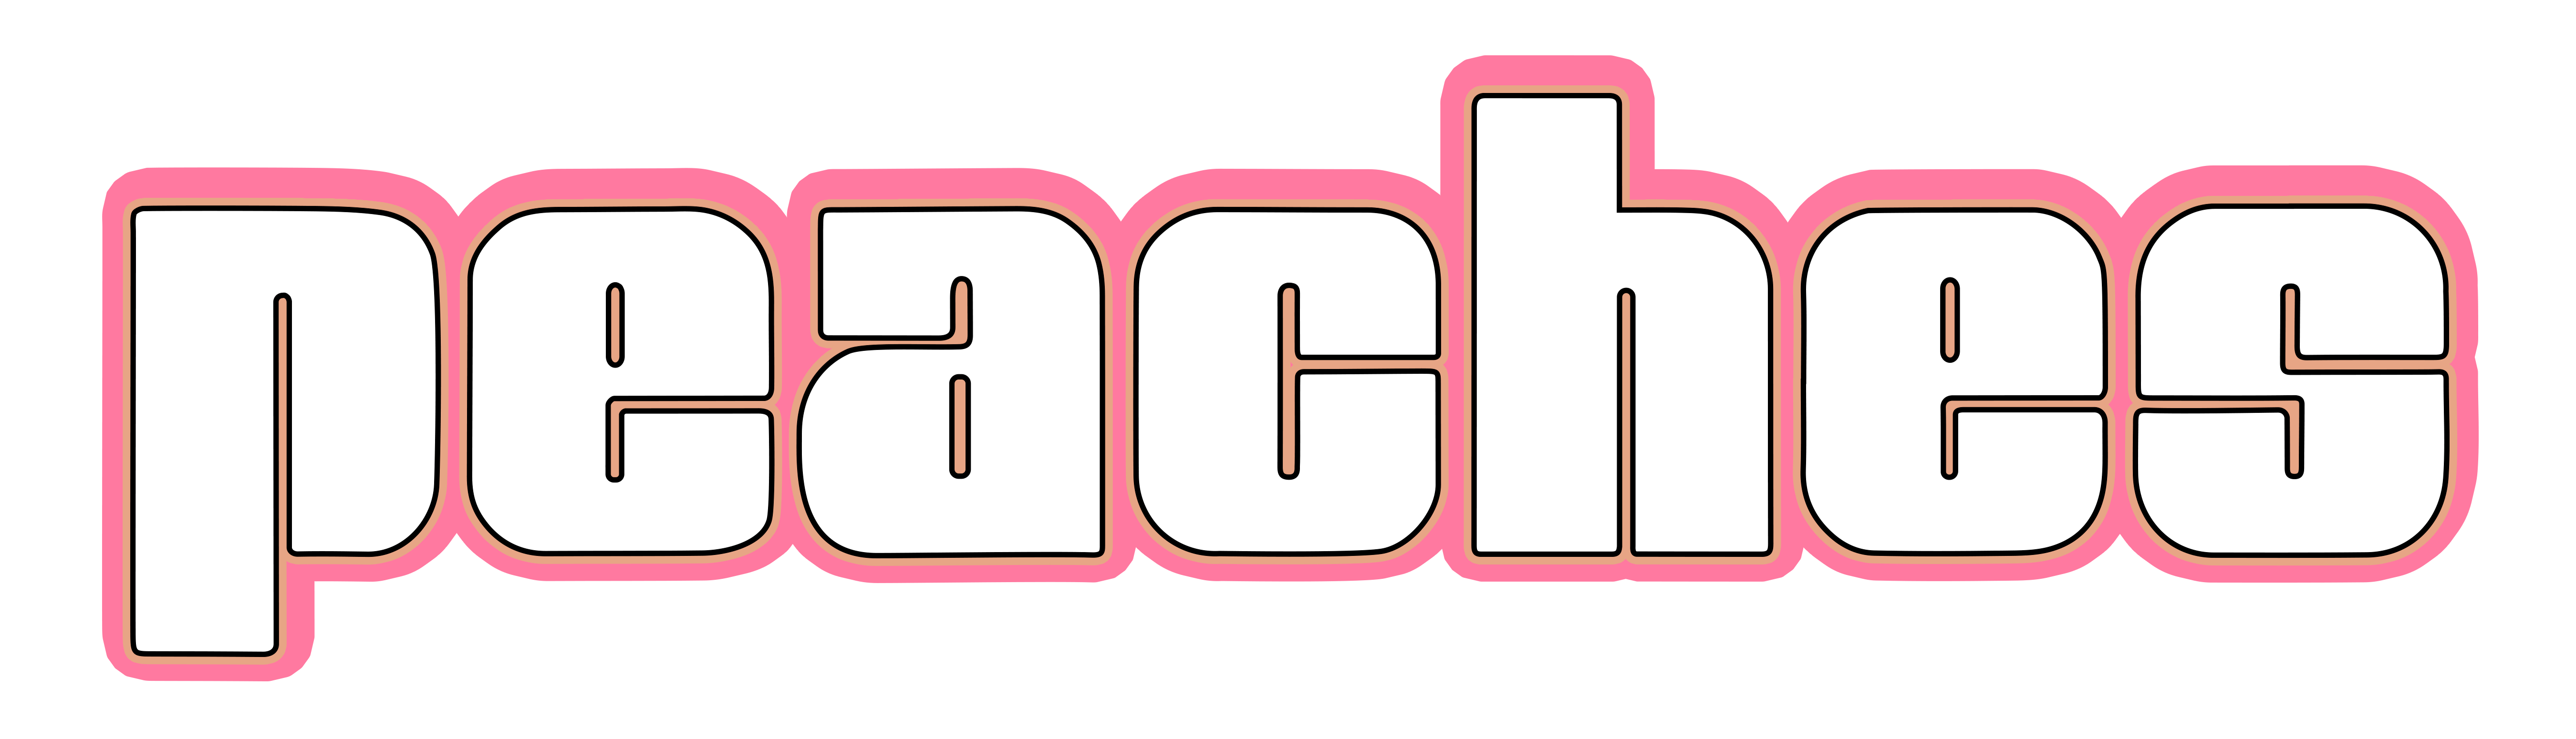 Peaches US logo